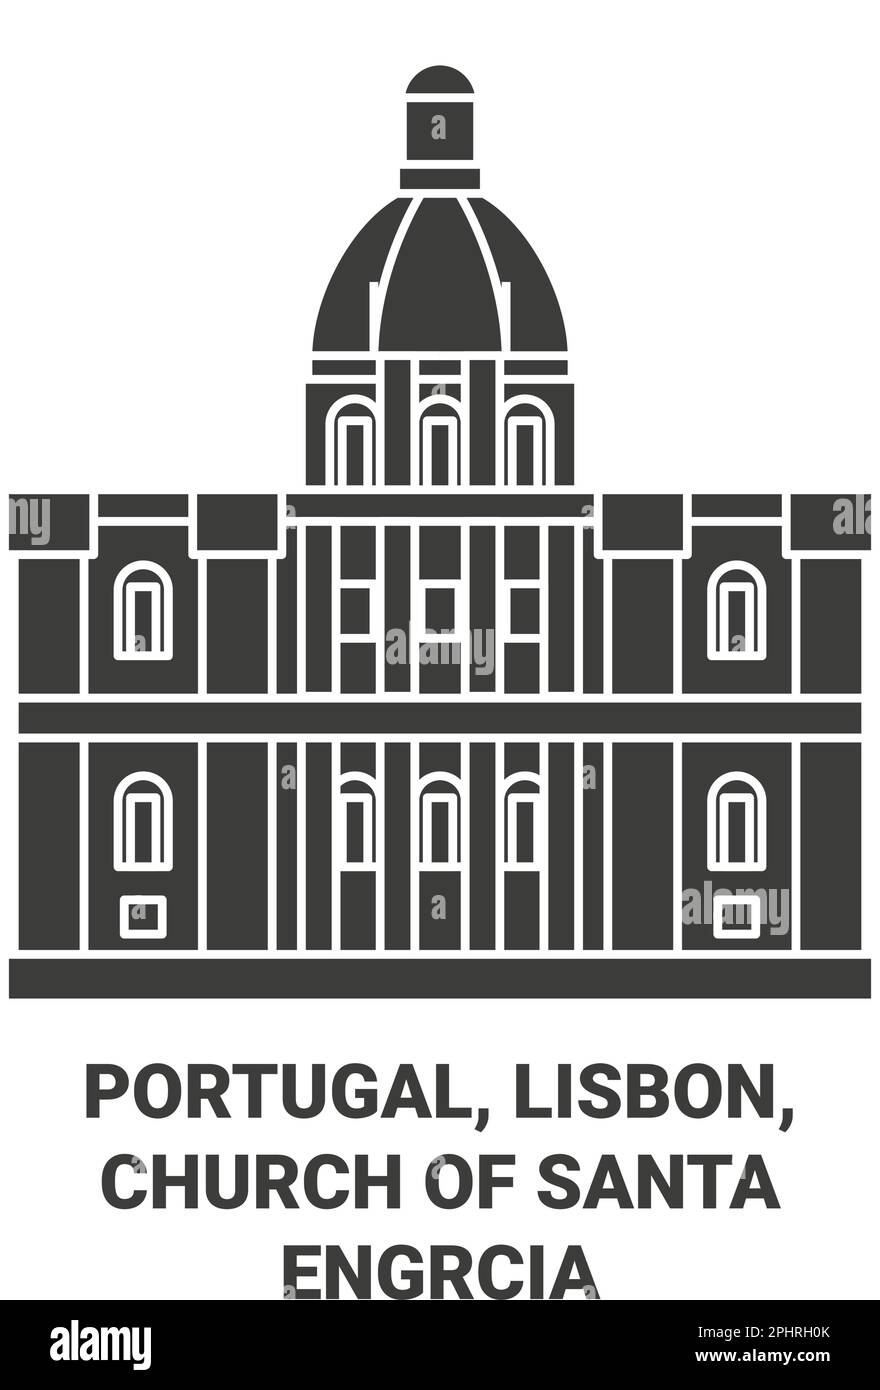 Portugal, Lisbon, Church Of Santa Engrcia travel landmark vector illustration Stock Vector